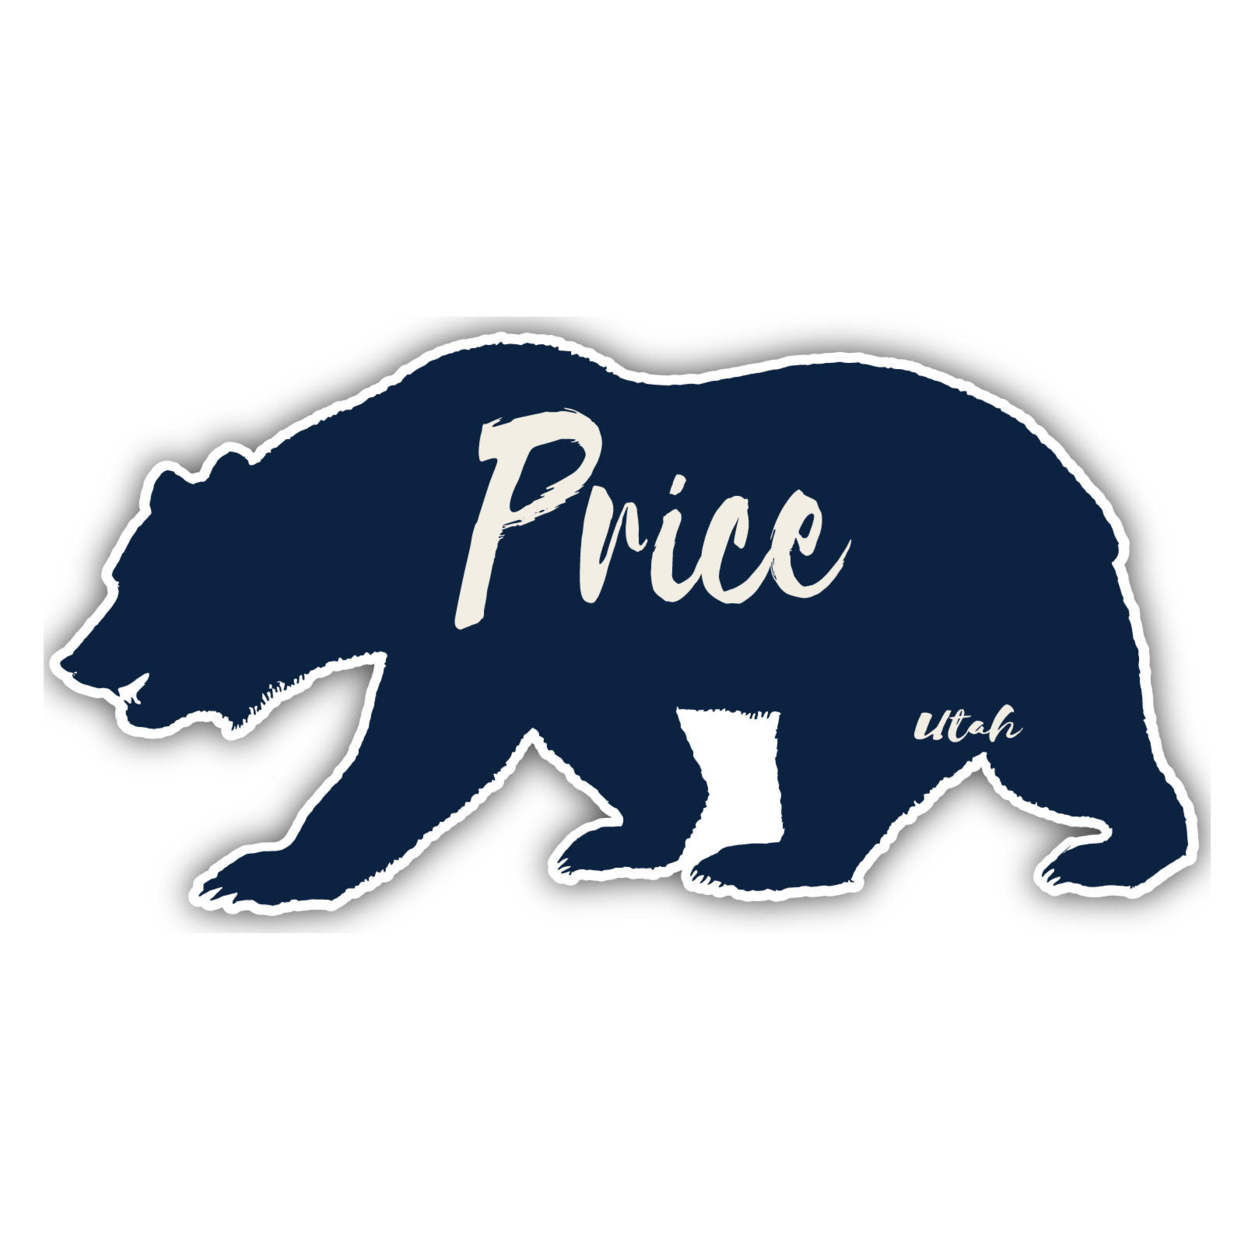 Price Utah Souvenir Decorative Stickers (Choose Theme And Size) - Single Unit, 4-Inch, Adventures Awaits